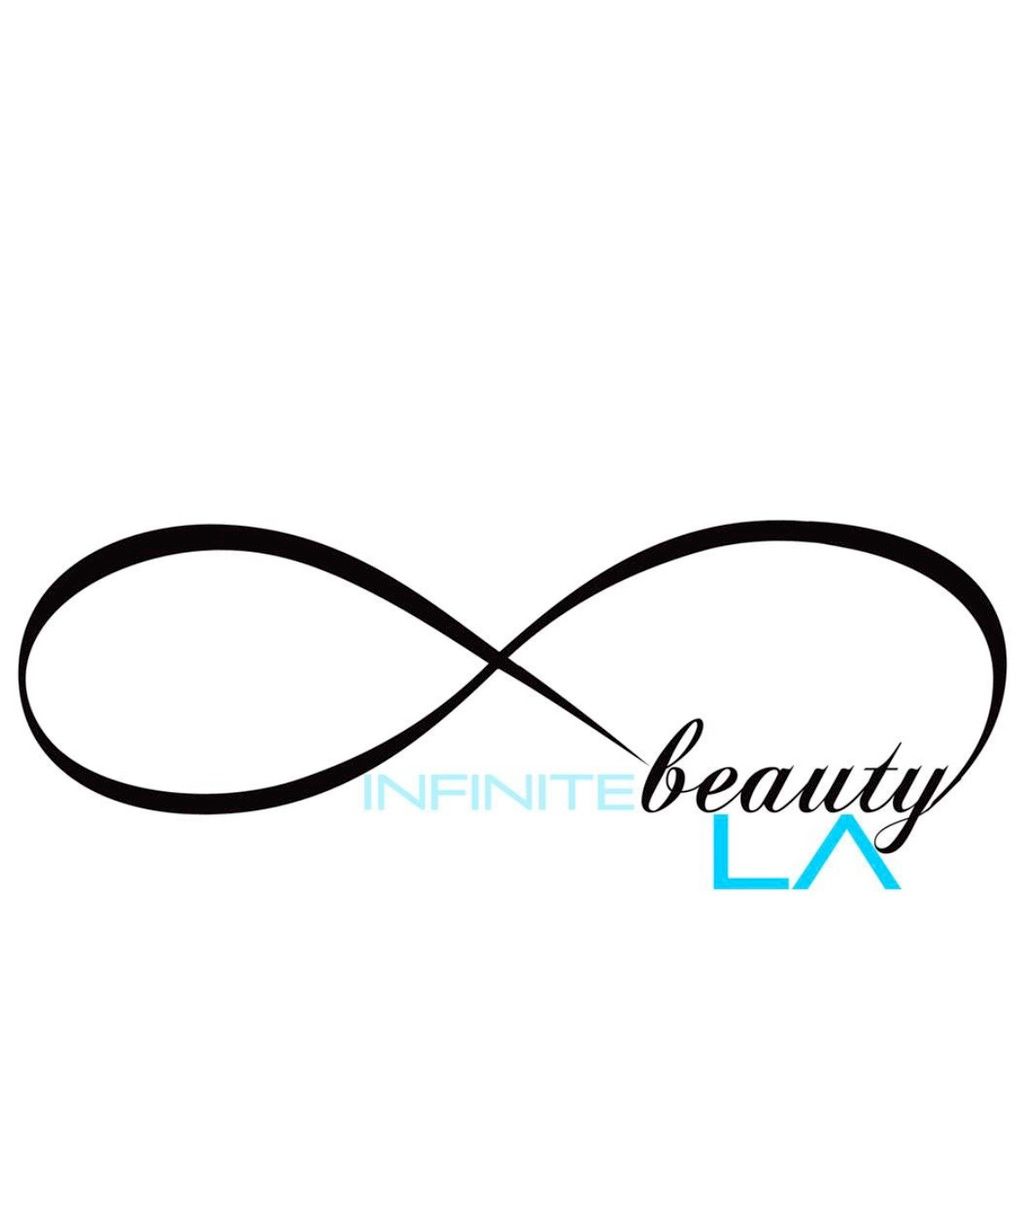 Infinite Beauty LA